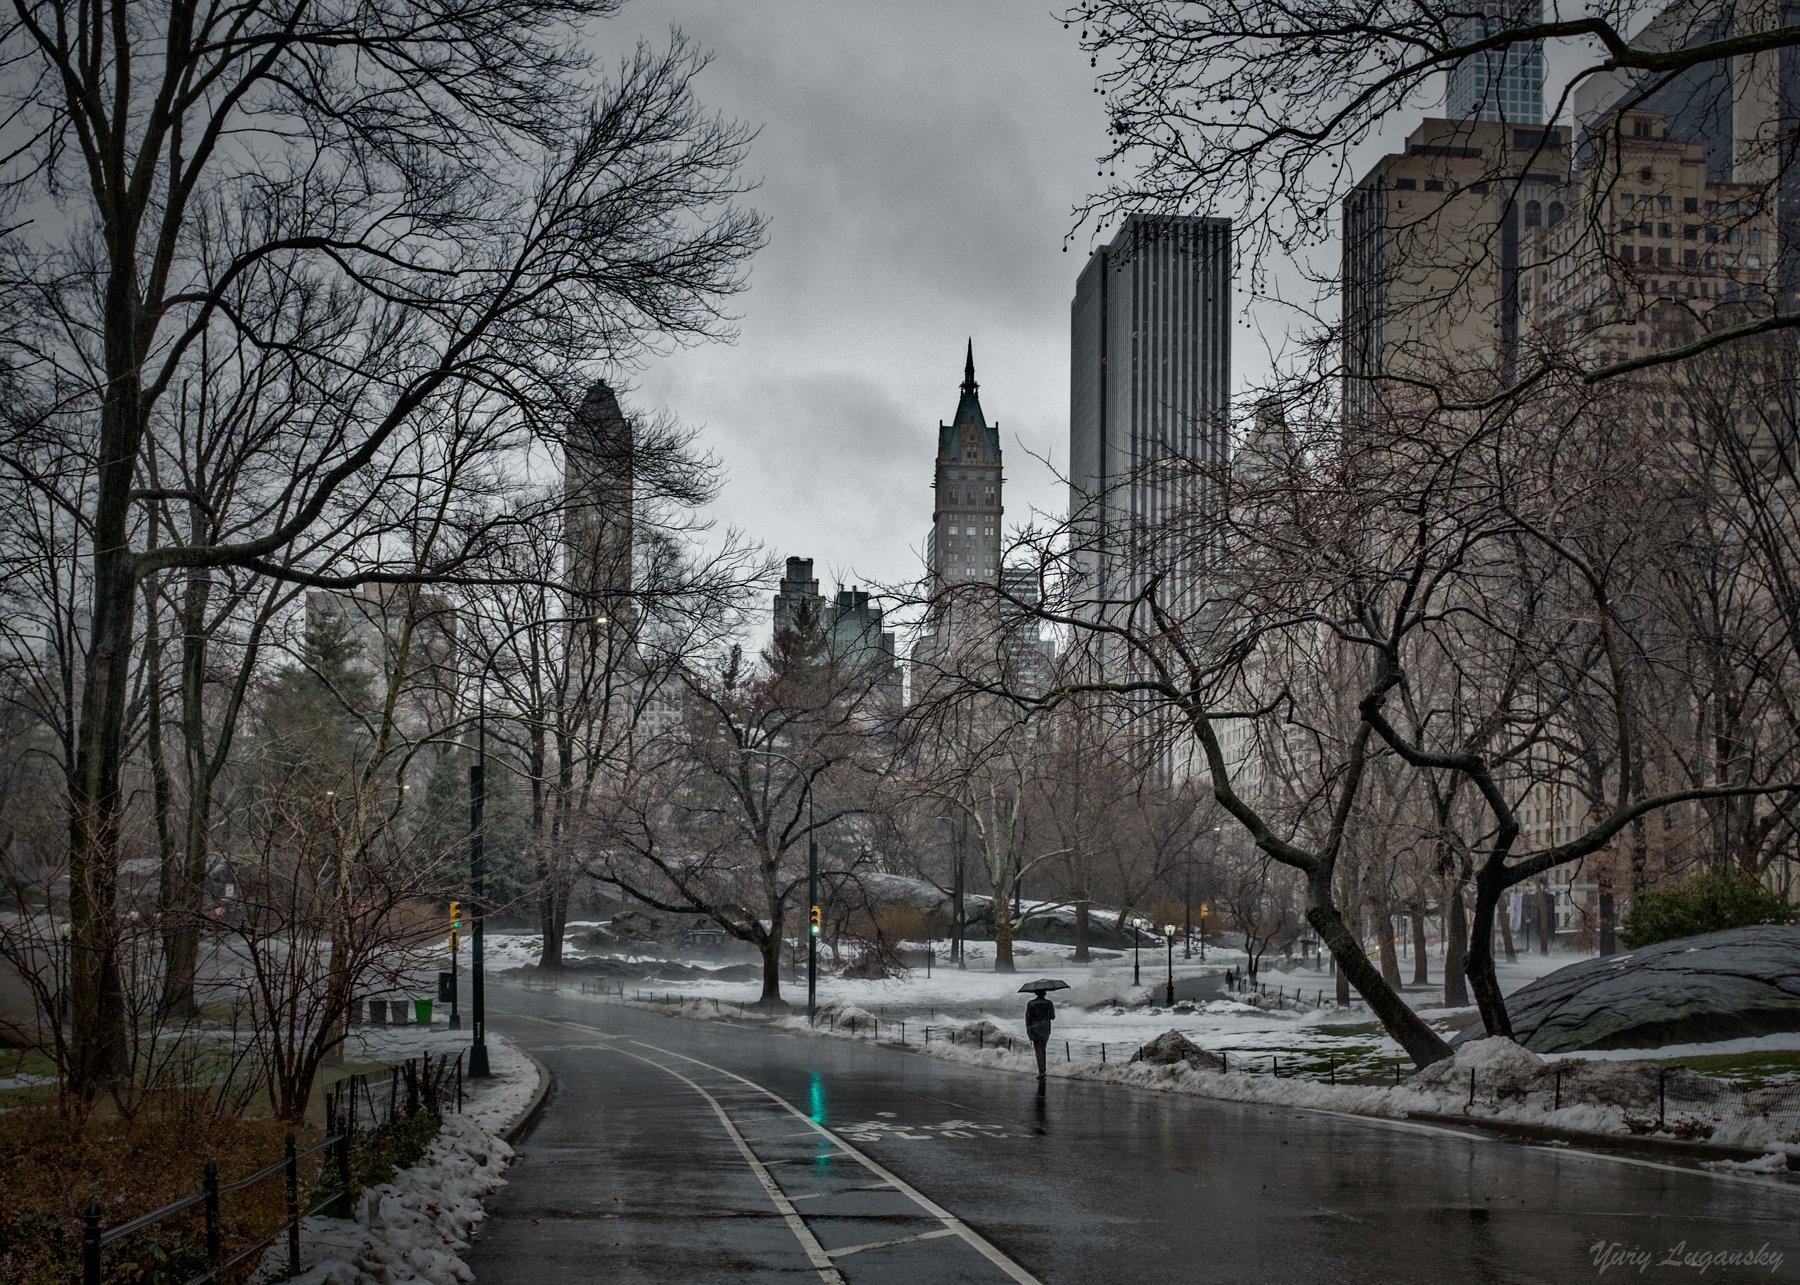 Loneliness central park winter new york city, Yury Lugansky